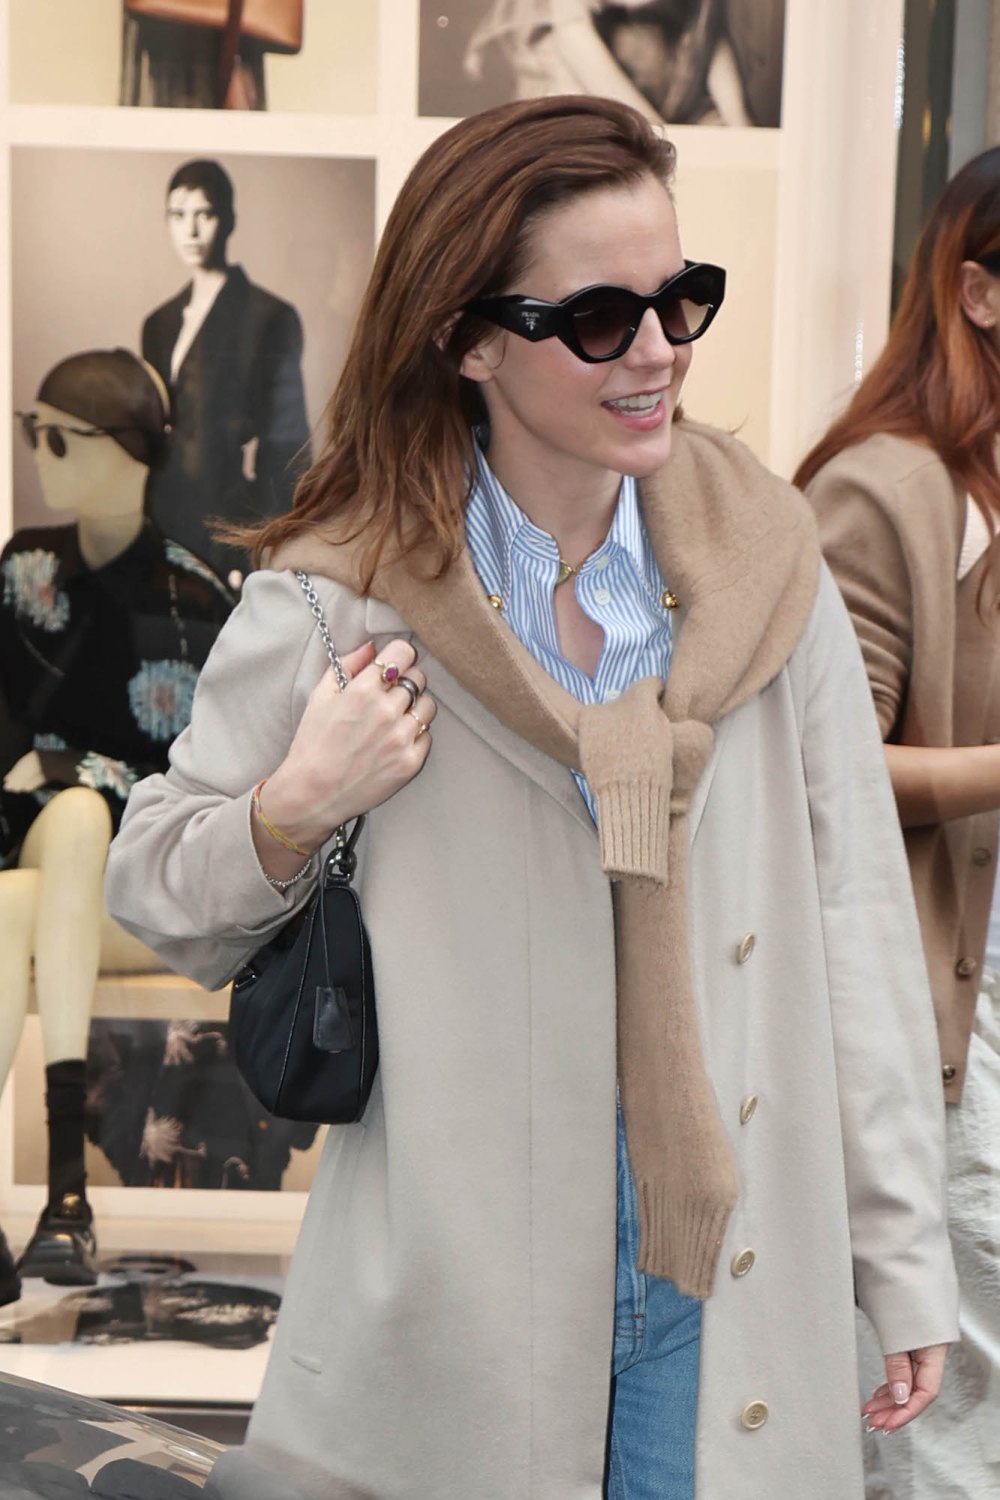 Emma Watson s Casual Milan Fashion Week Outfit Has Us Yearning for an Italian Spring Getaway